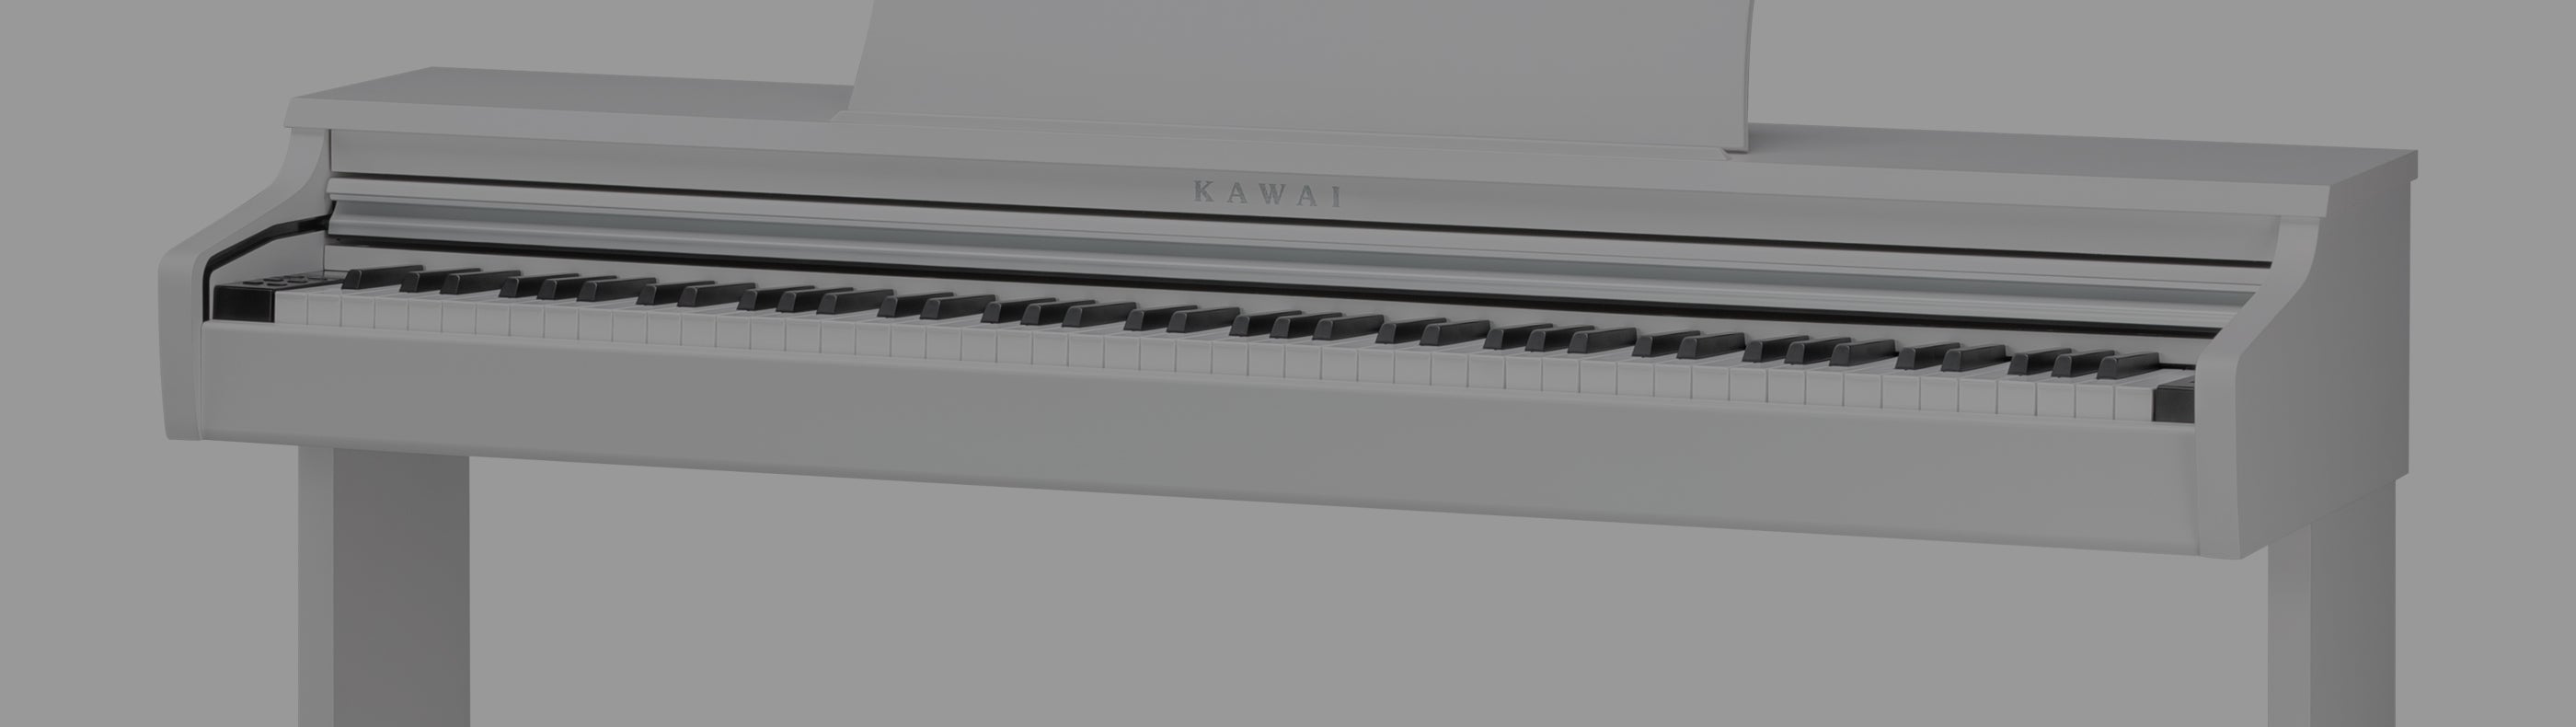 Kawai KDP75